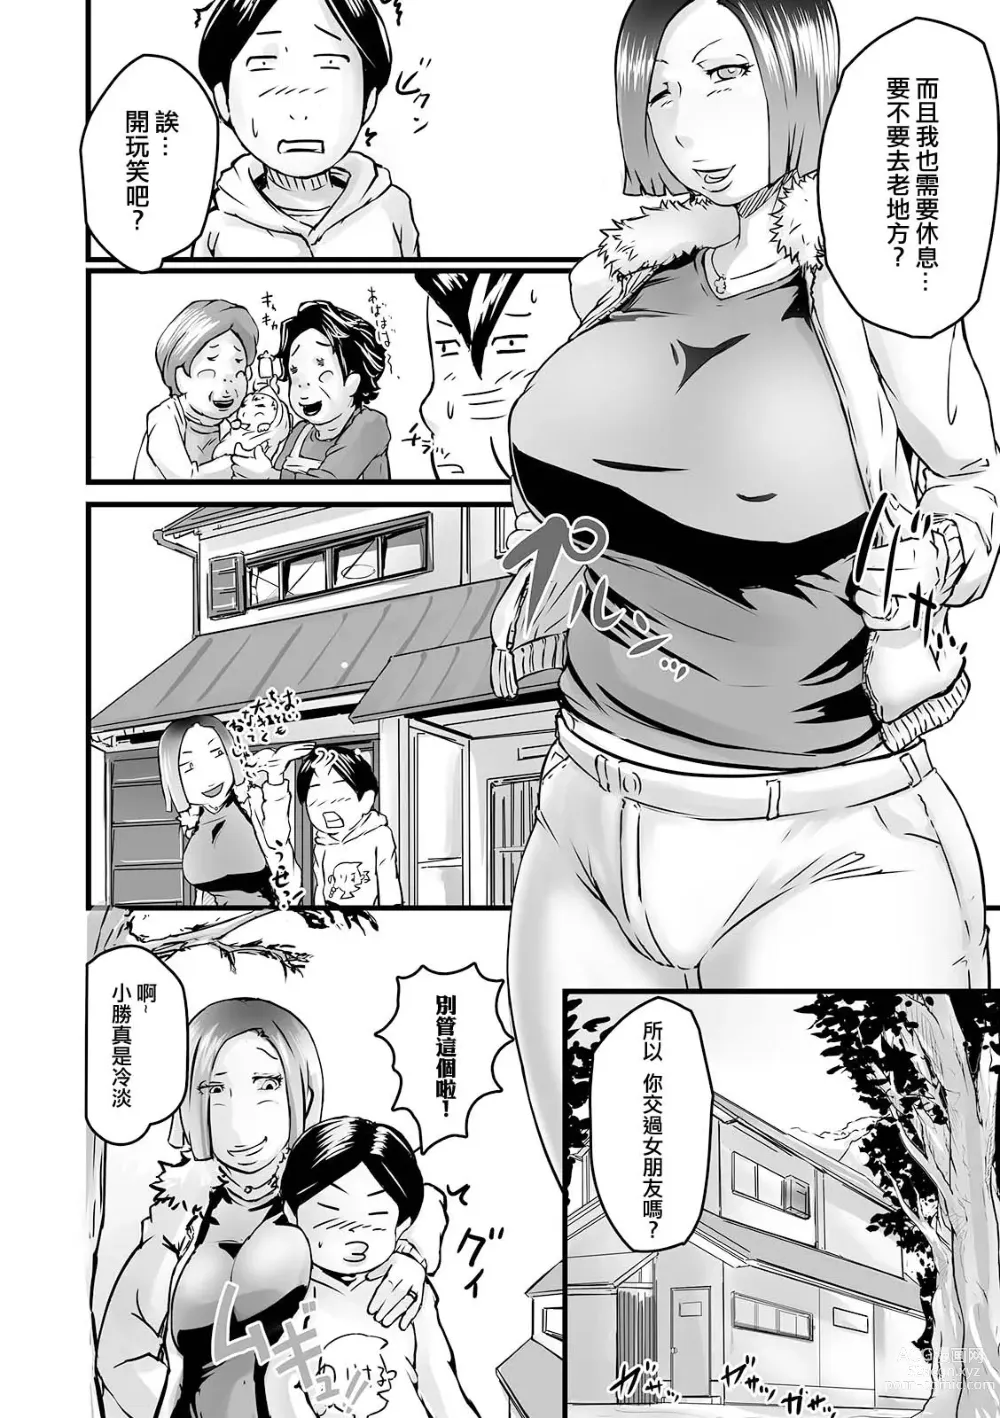 Page 2 of manga 昔散々弄られたお姉ちゃんが人妻になって帰って来た件